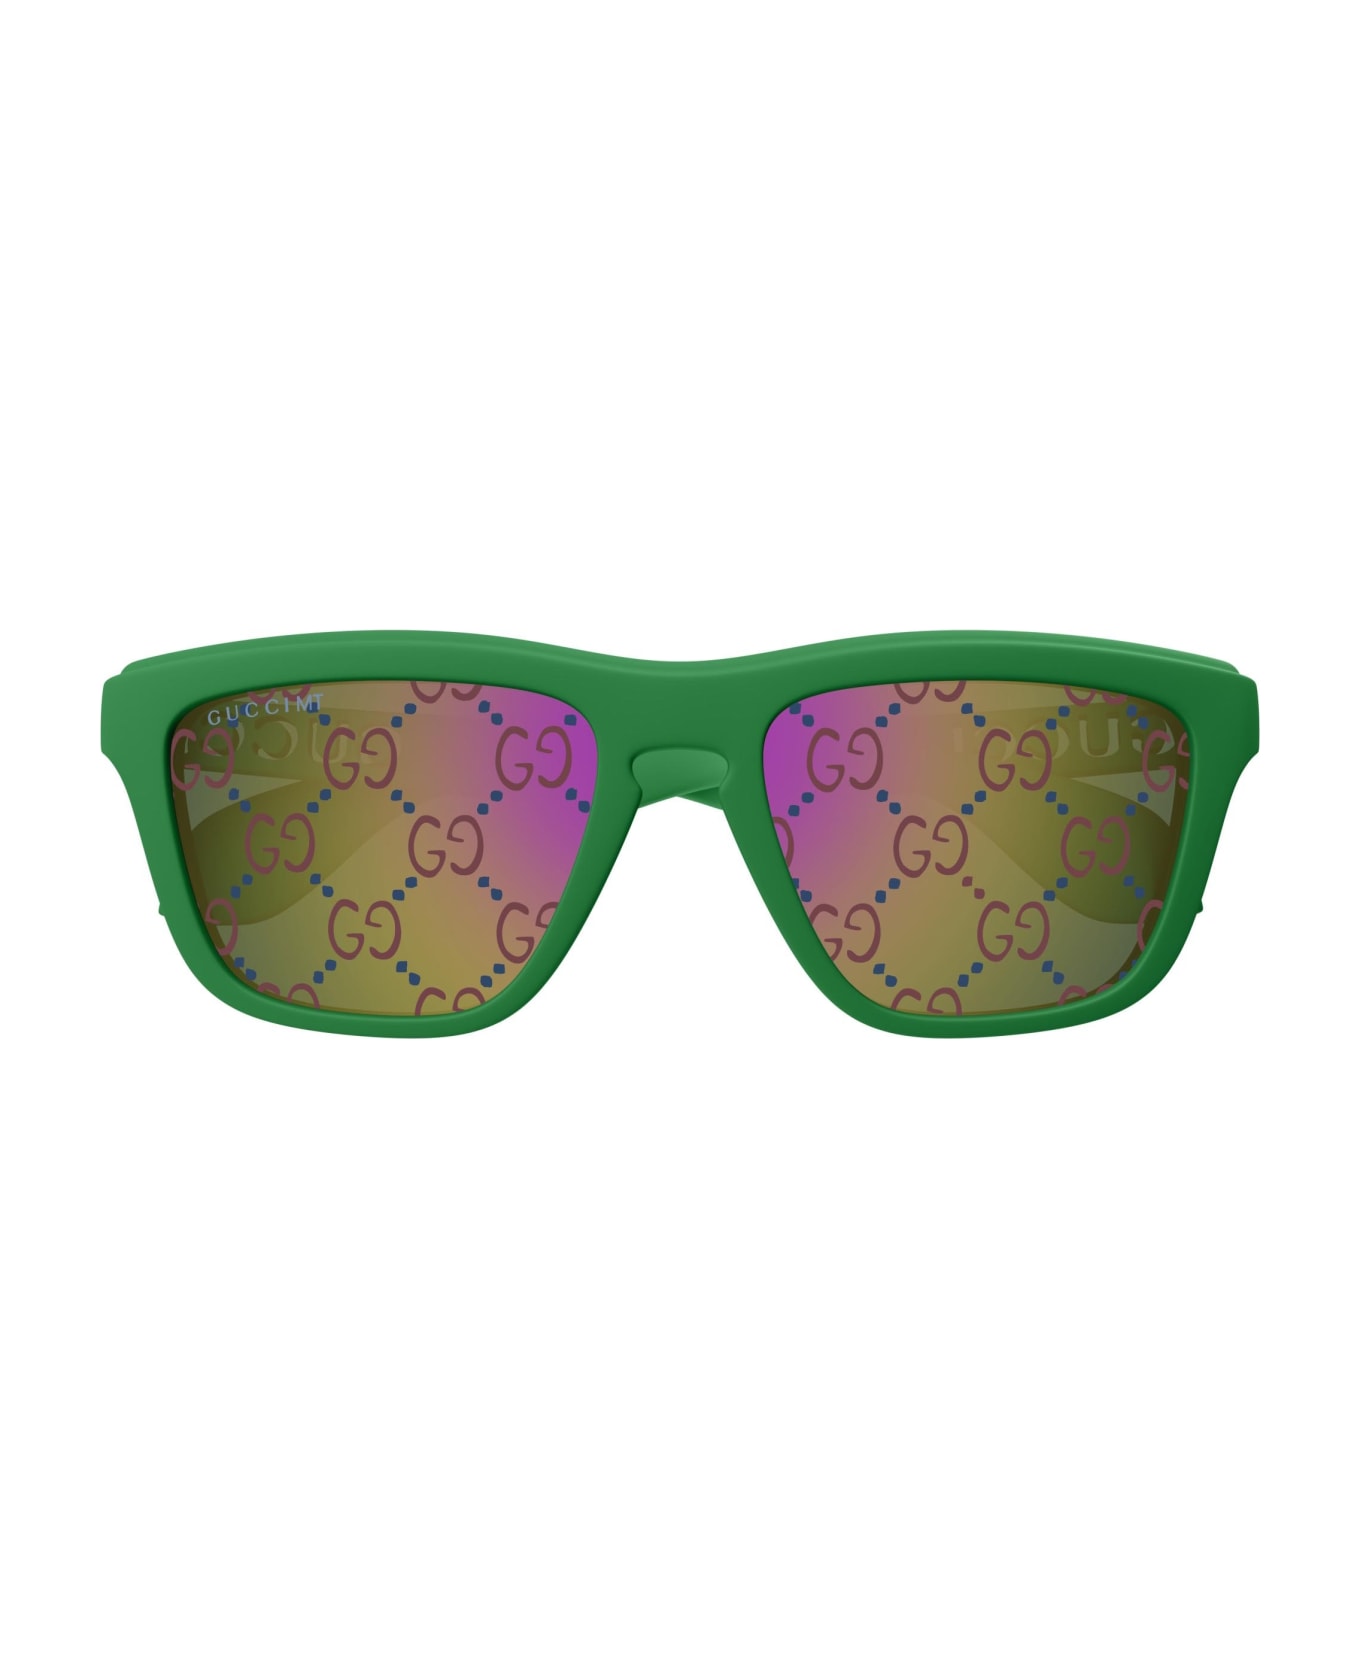 Gucci Eyewear Sunglasses - Verde/Blu サングラス